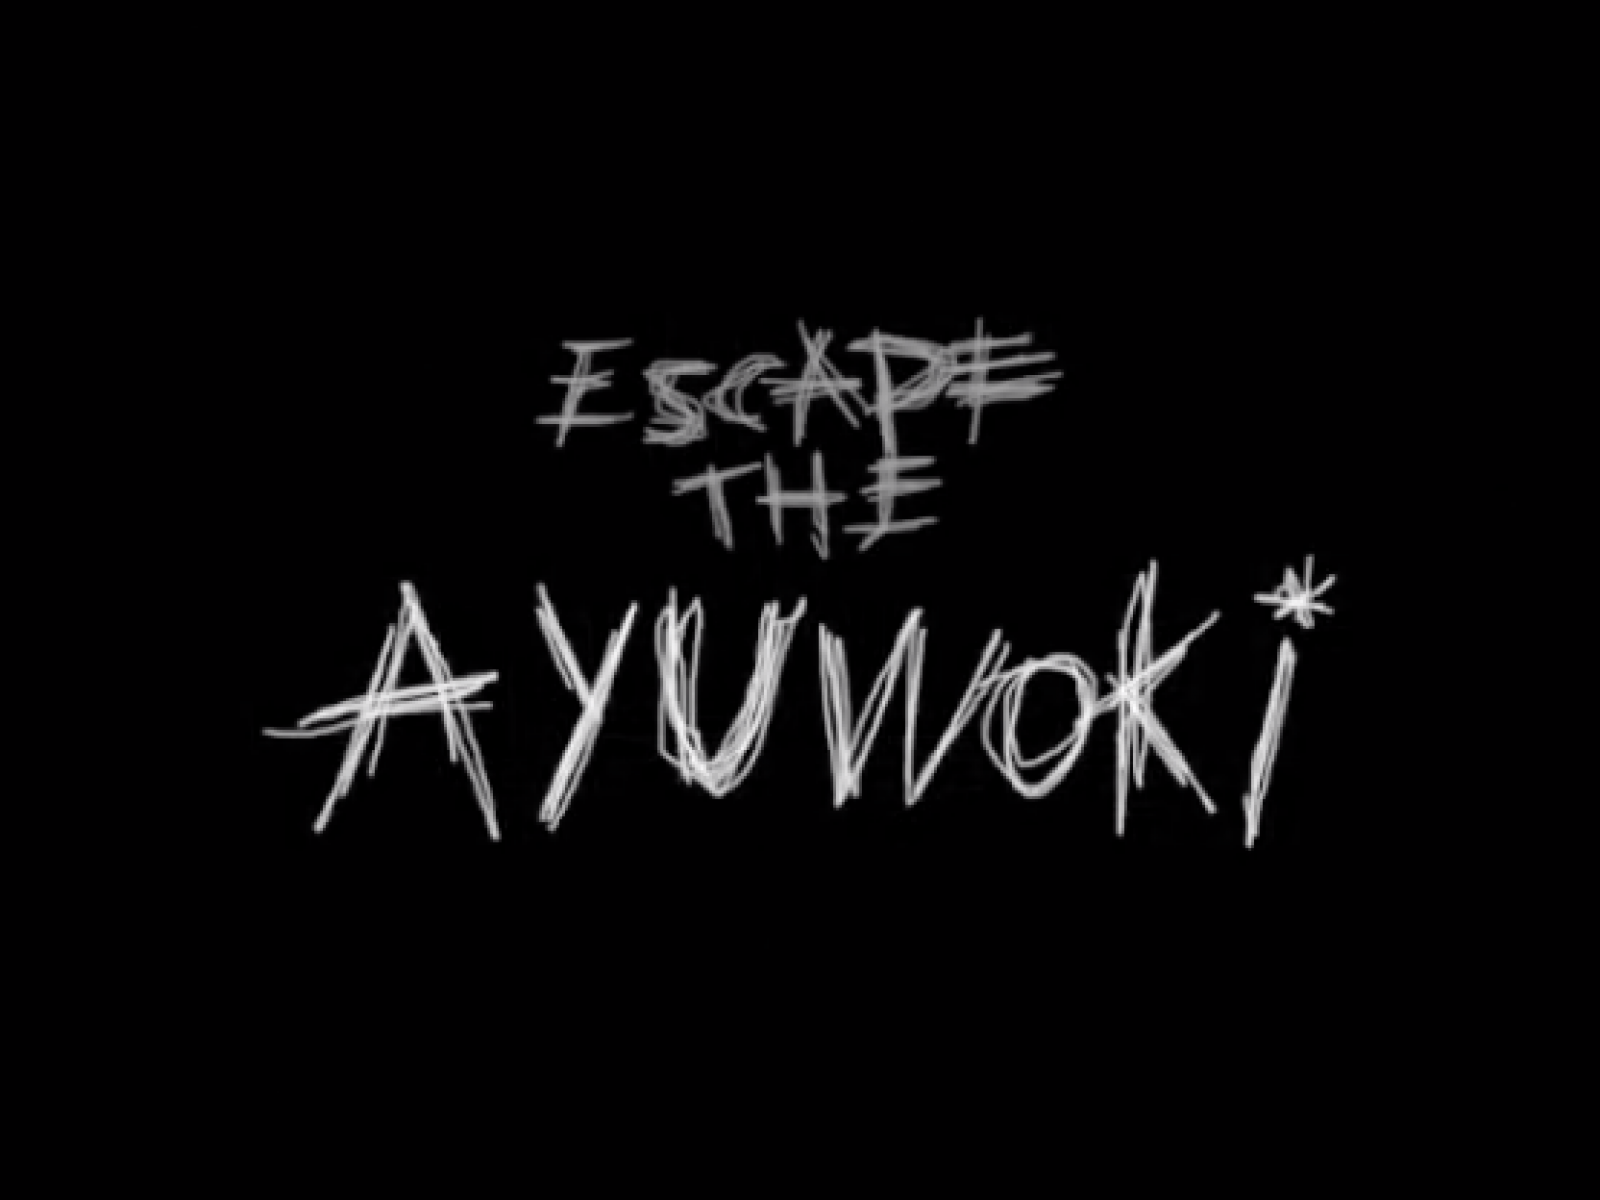 Escape The Ayuwoki' Is a Strange New Horror Game With a Disturbingly Familiar Villain